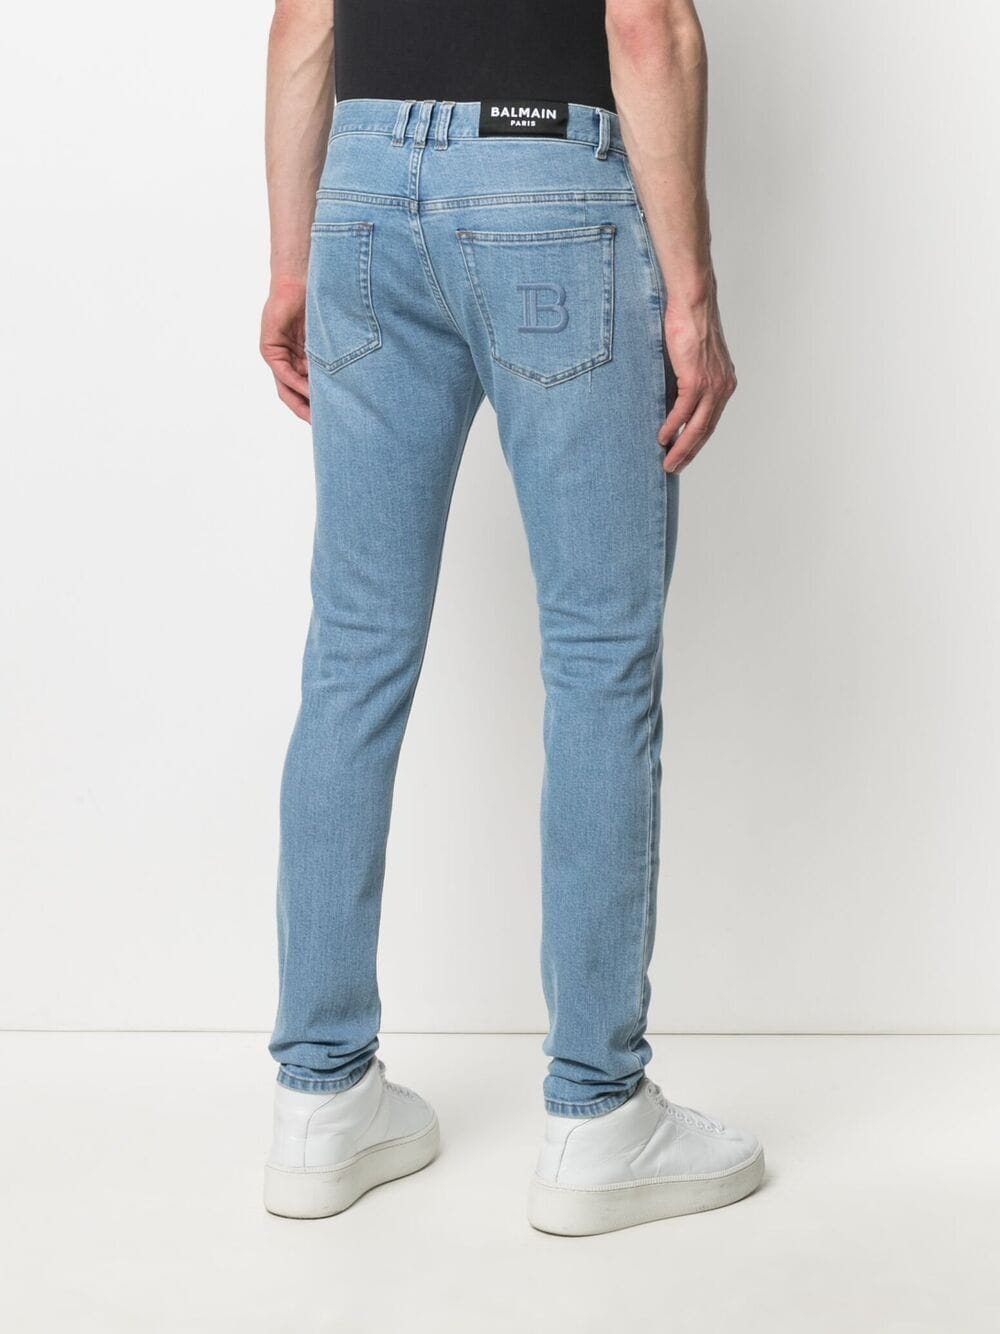 BALMAIN Monogram Slim Jeans - Clothing from Circle Fashion UK